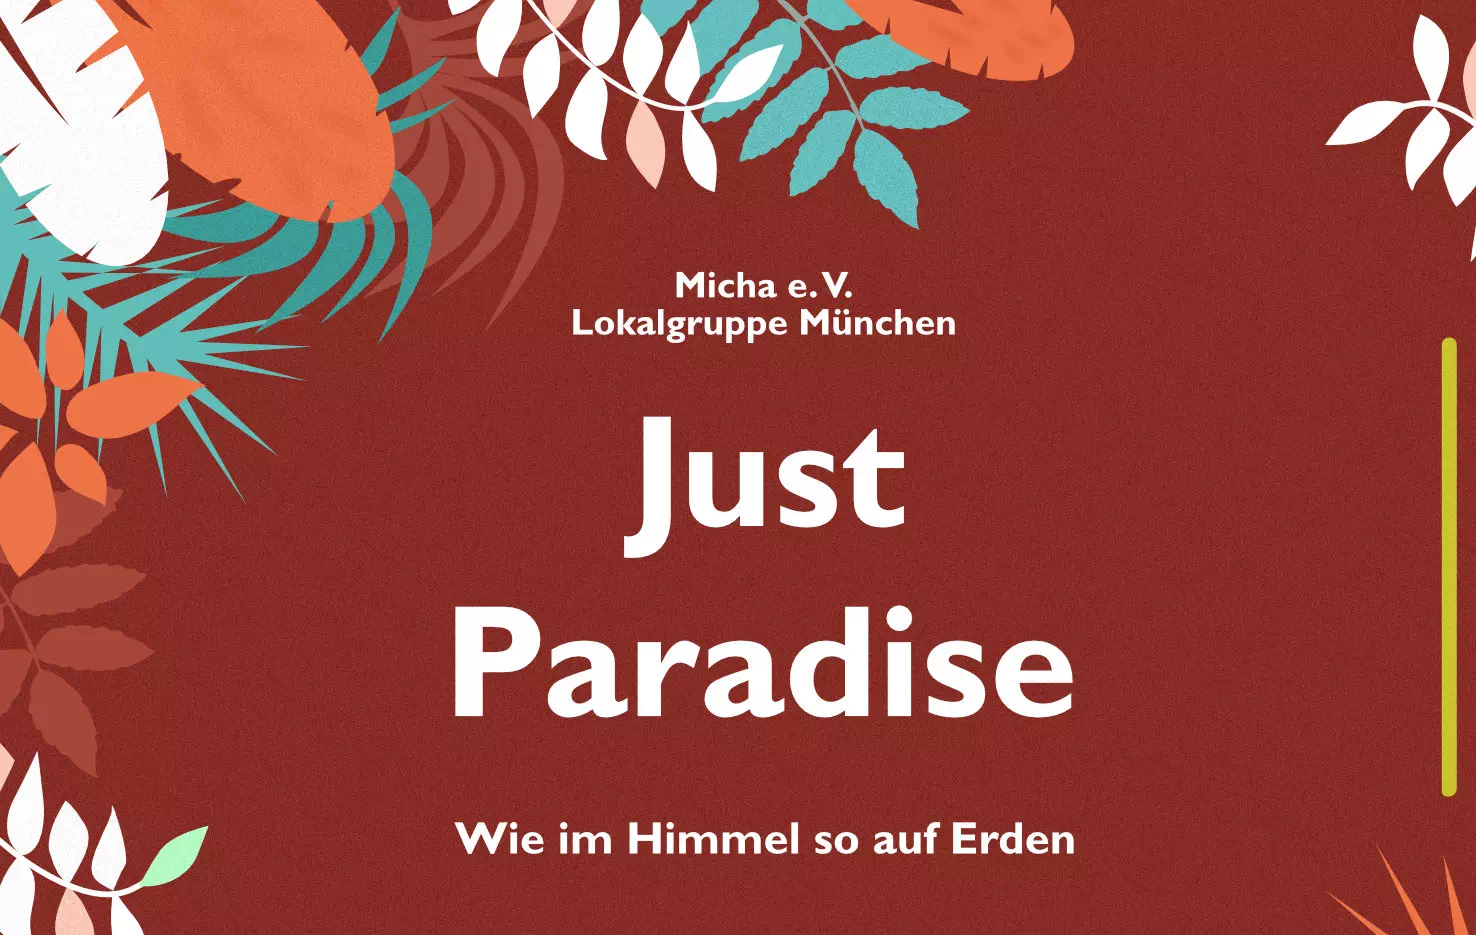 Micha München Lokalgruppe, Micha-Initiative: Just Paradise.